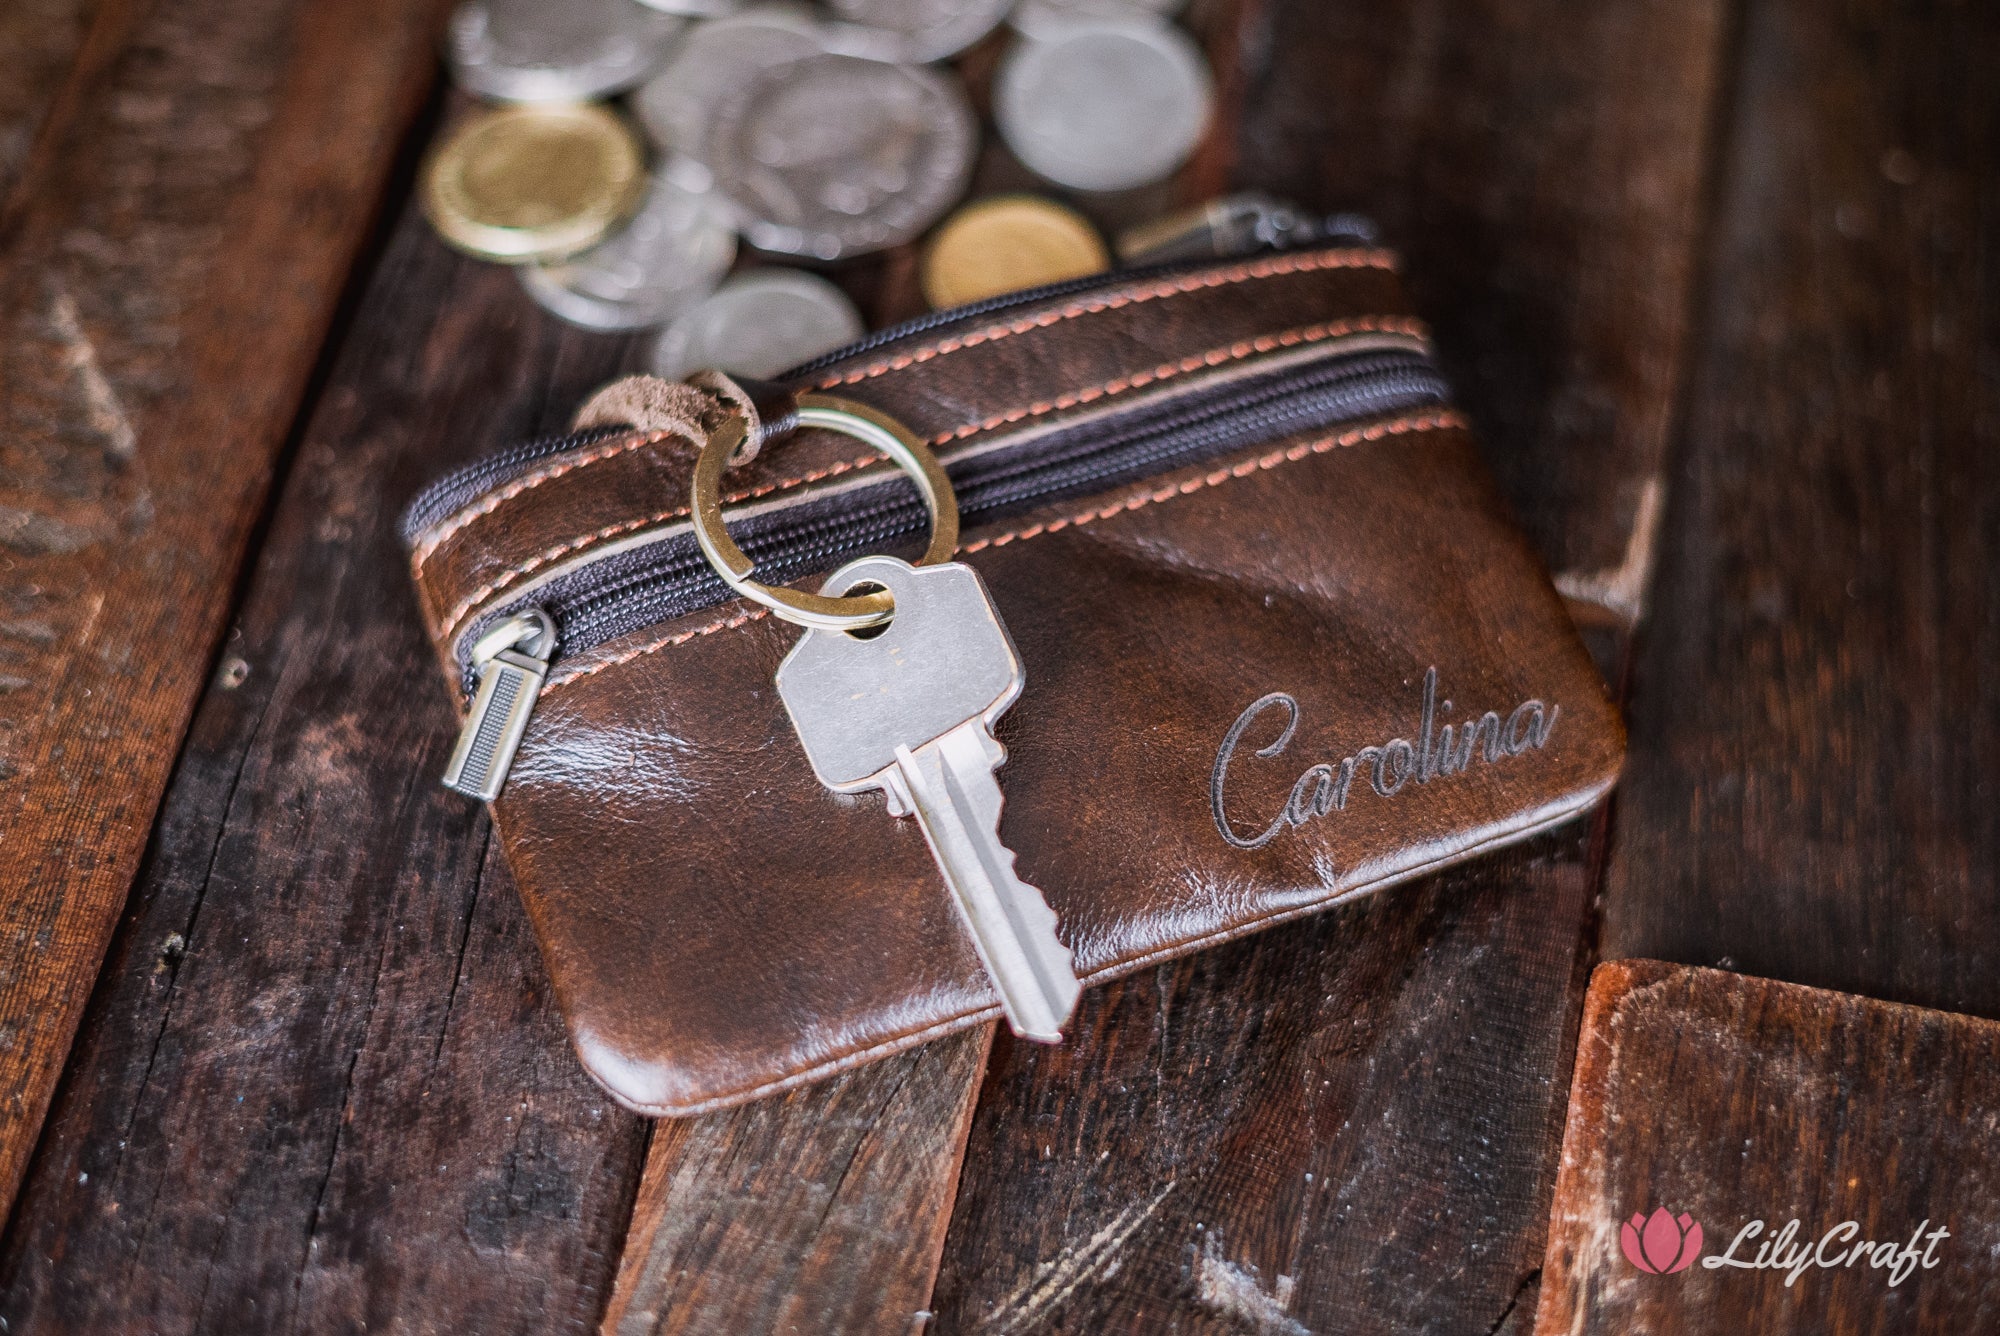 zipper coin purse